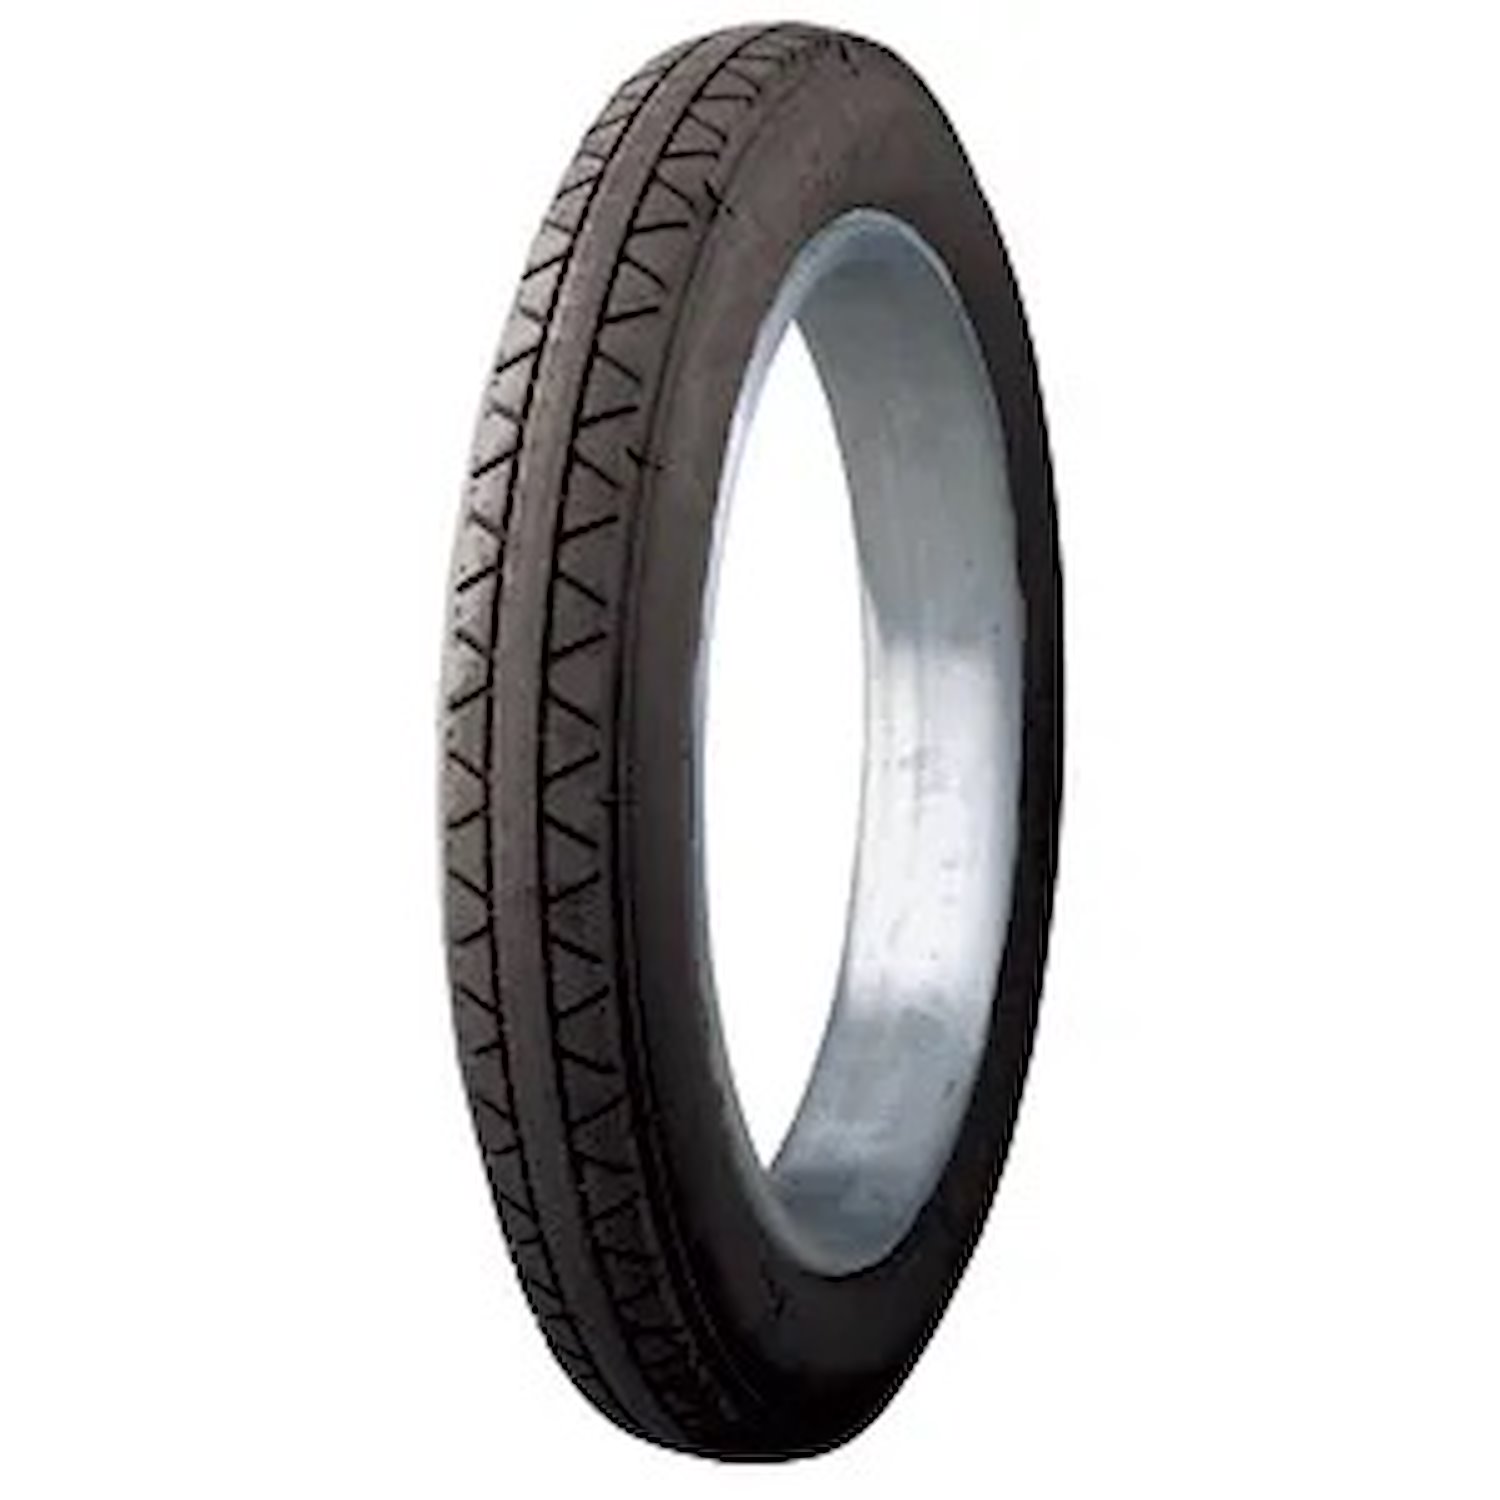 77550 Tire, Excelsior, Beaded Edge, All Black, 710x90